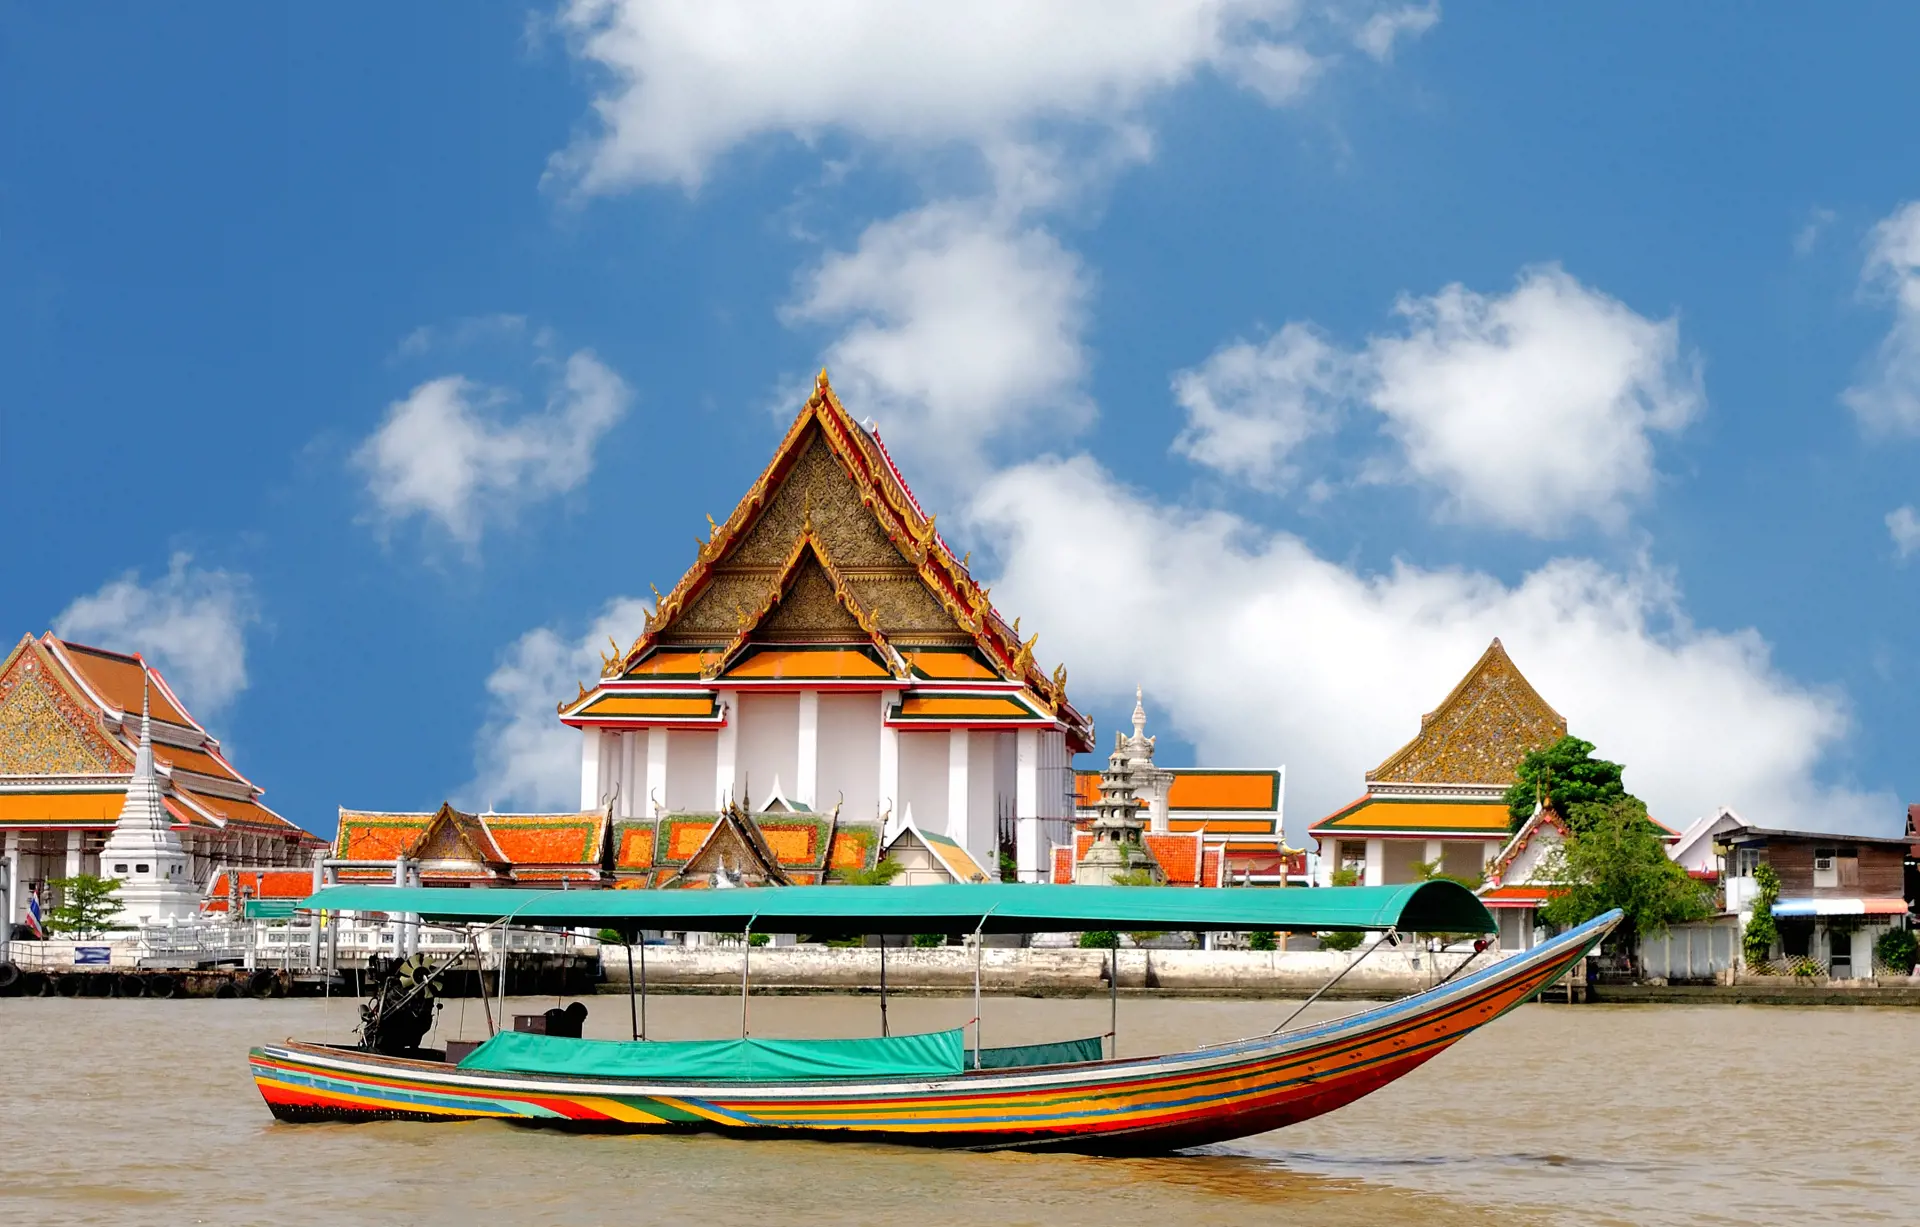 Thailand_Bangkok_Boat on the river Chao Phraya_58663423.jpg